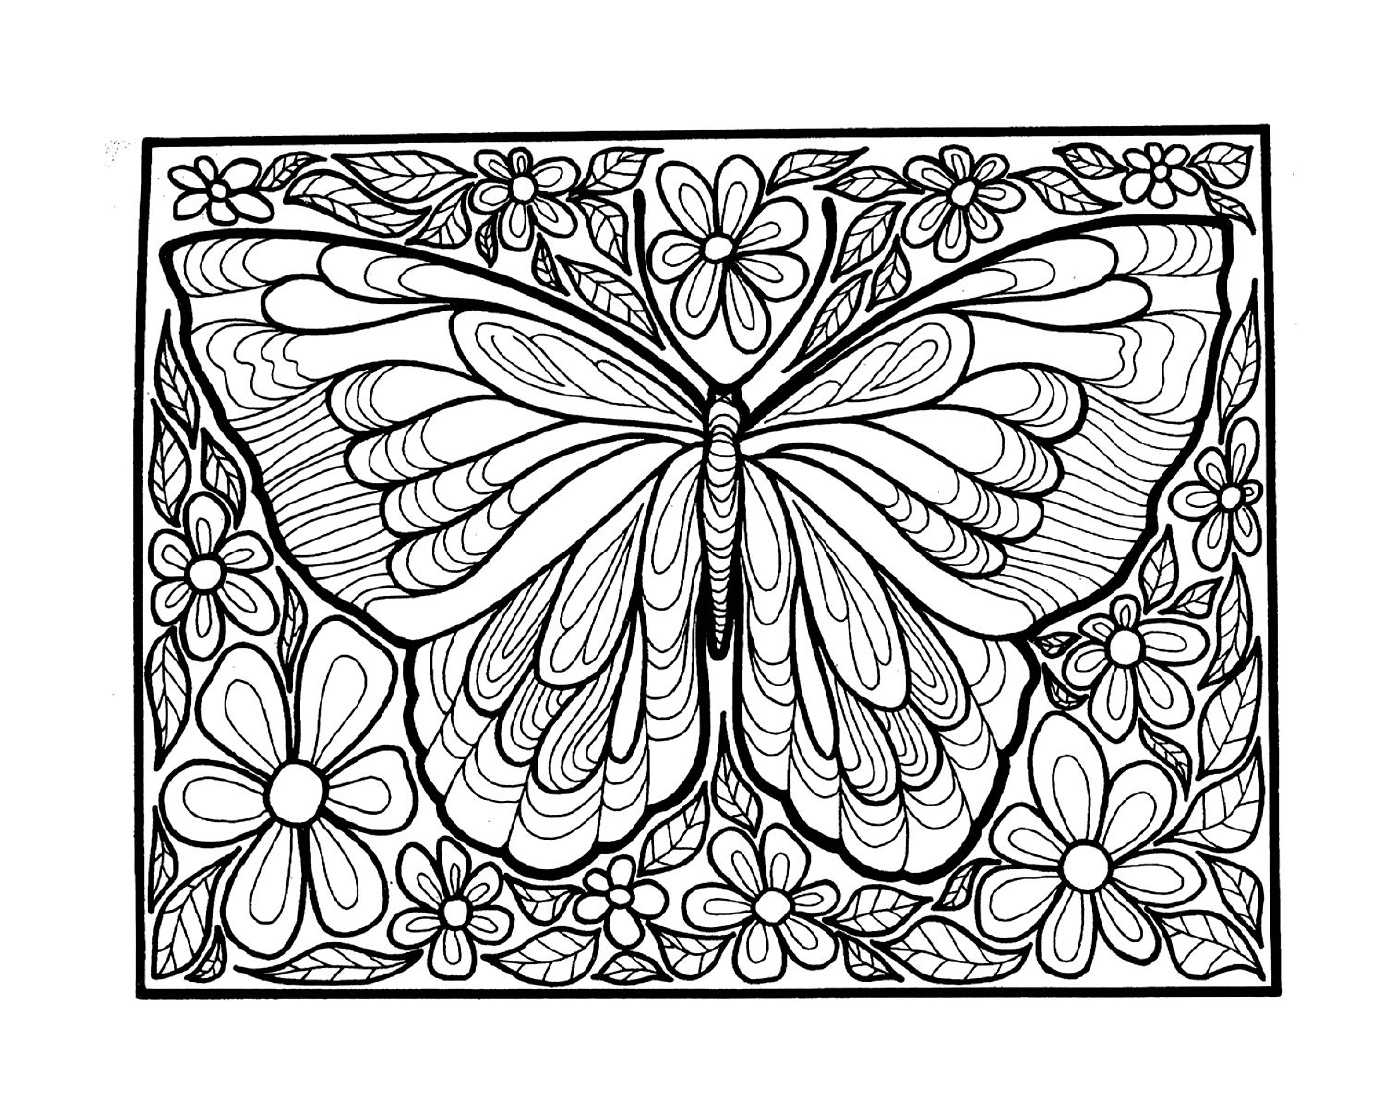  mariposa adulta con alas 